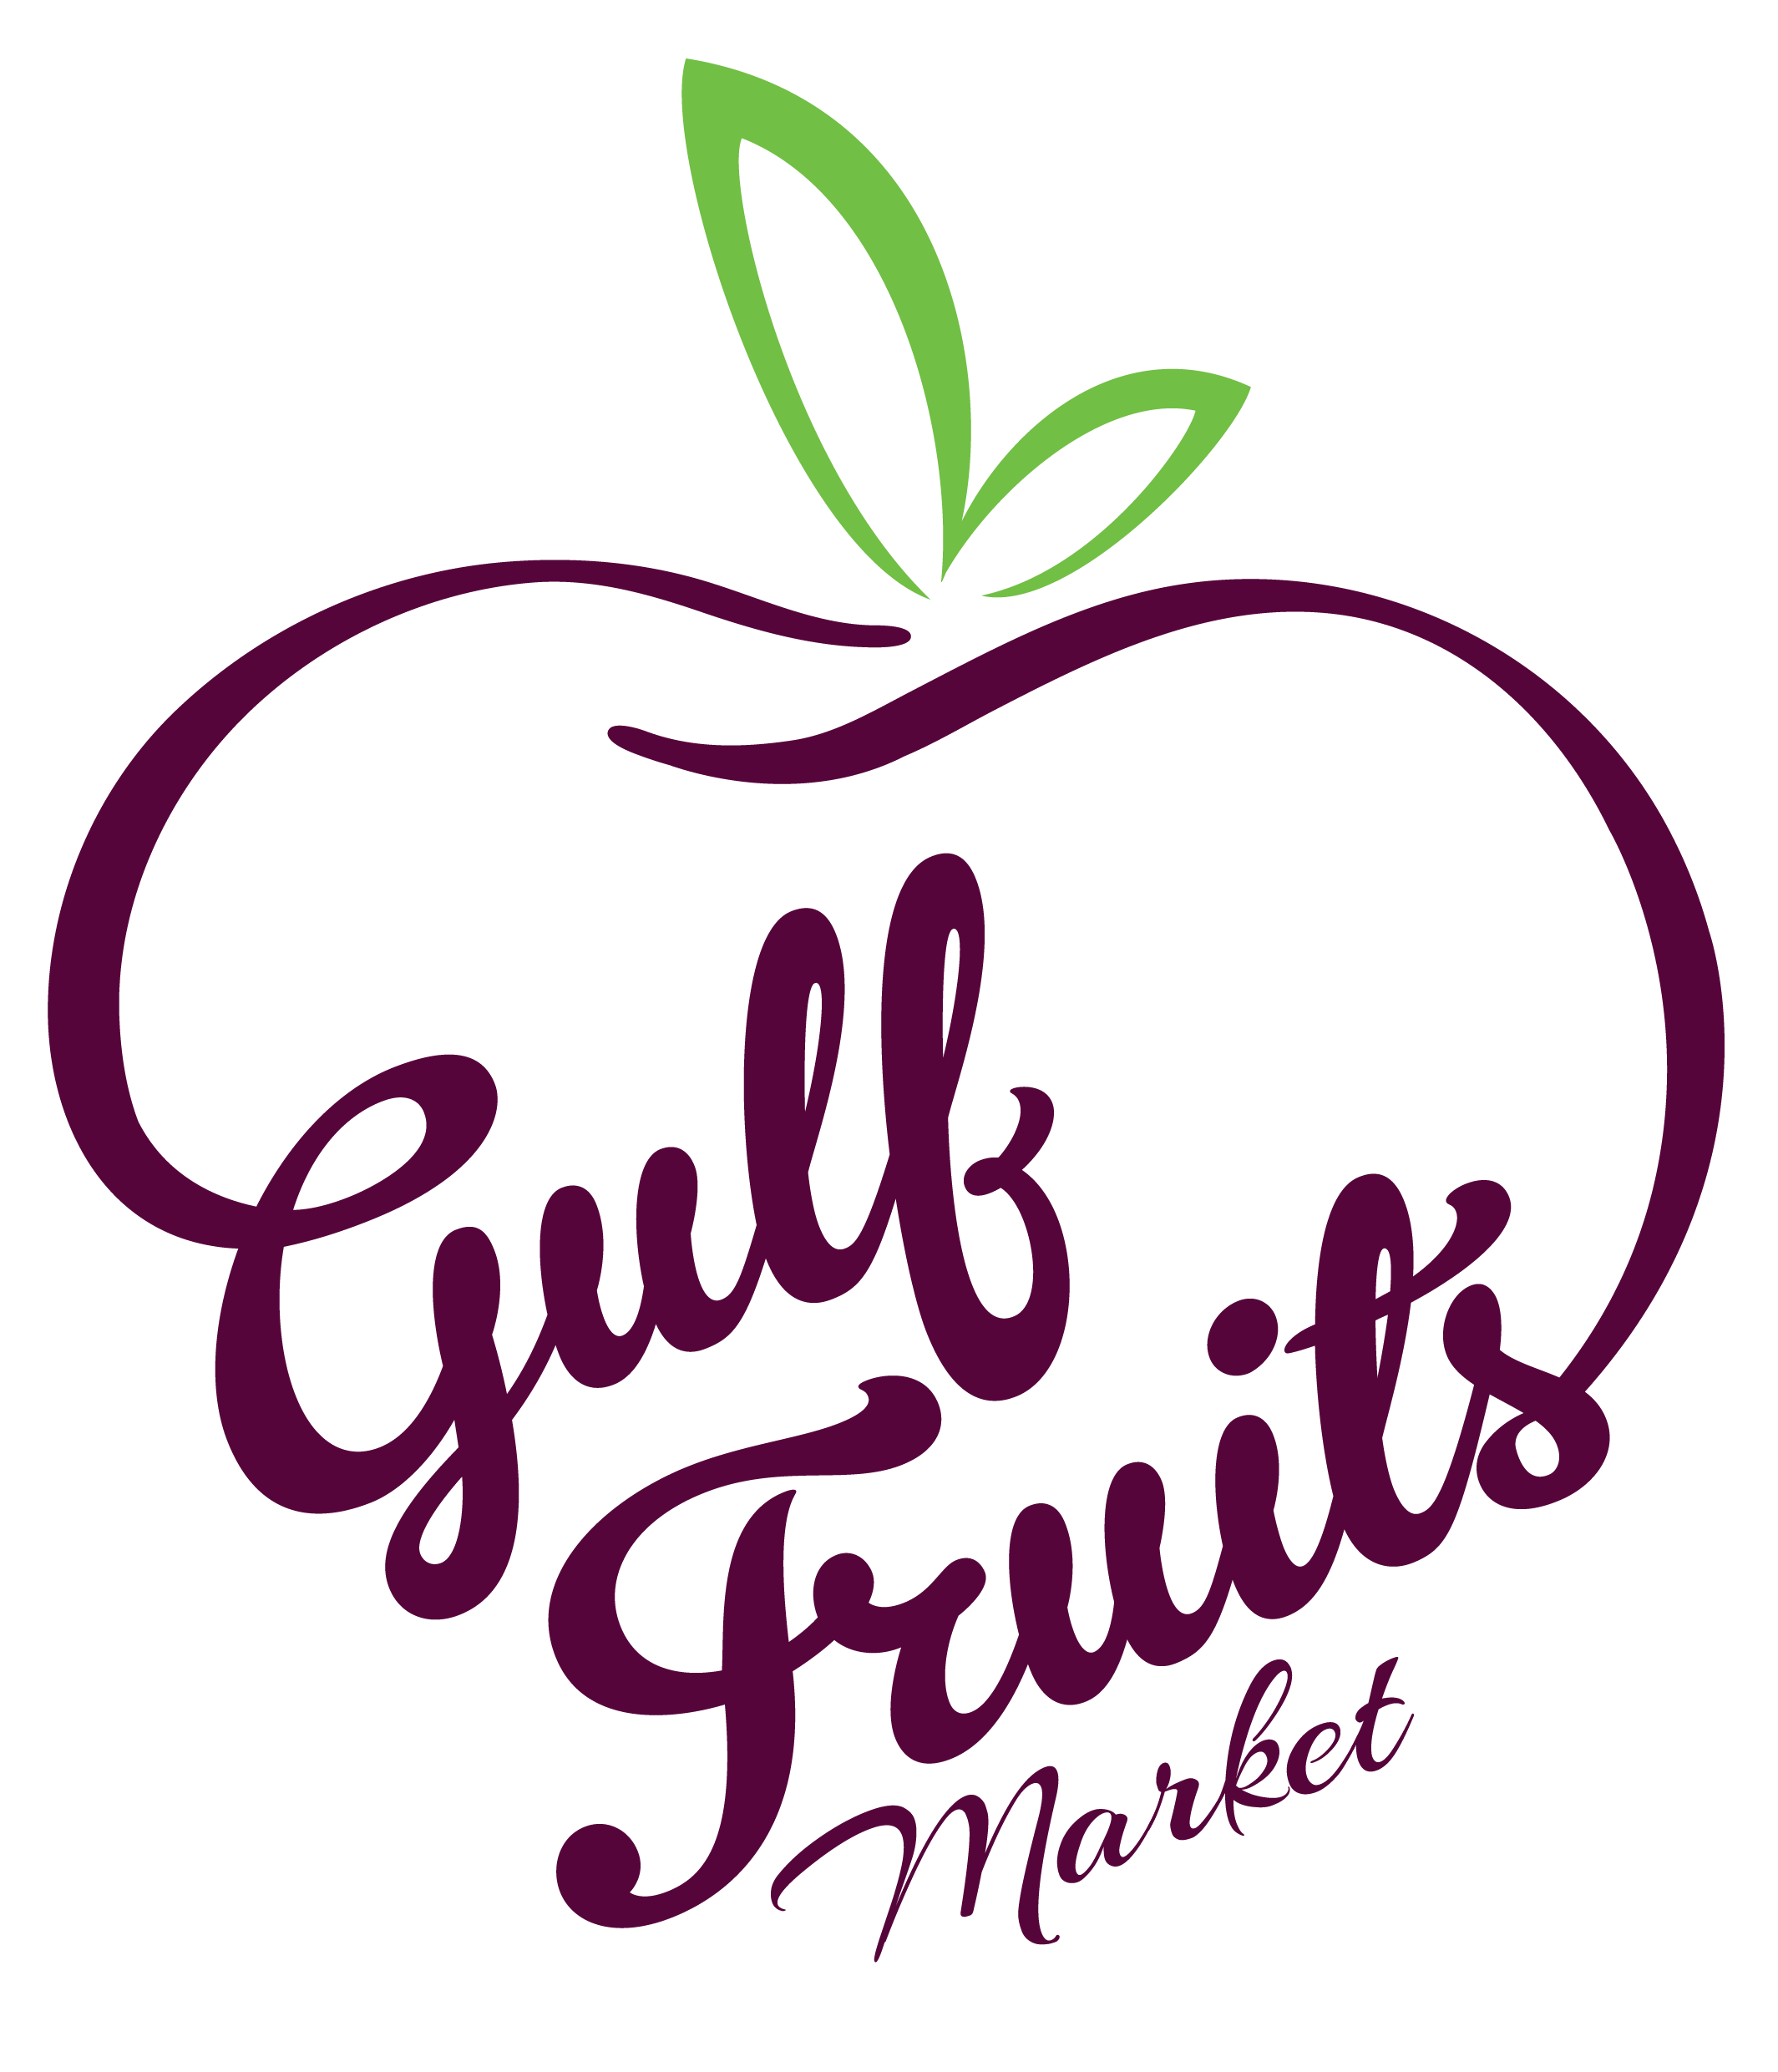 Gulf Fruits Trade Company LLC